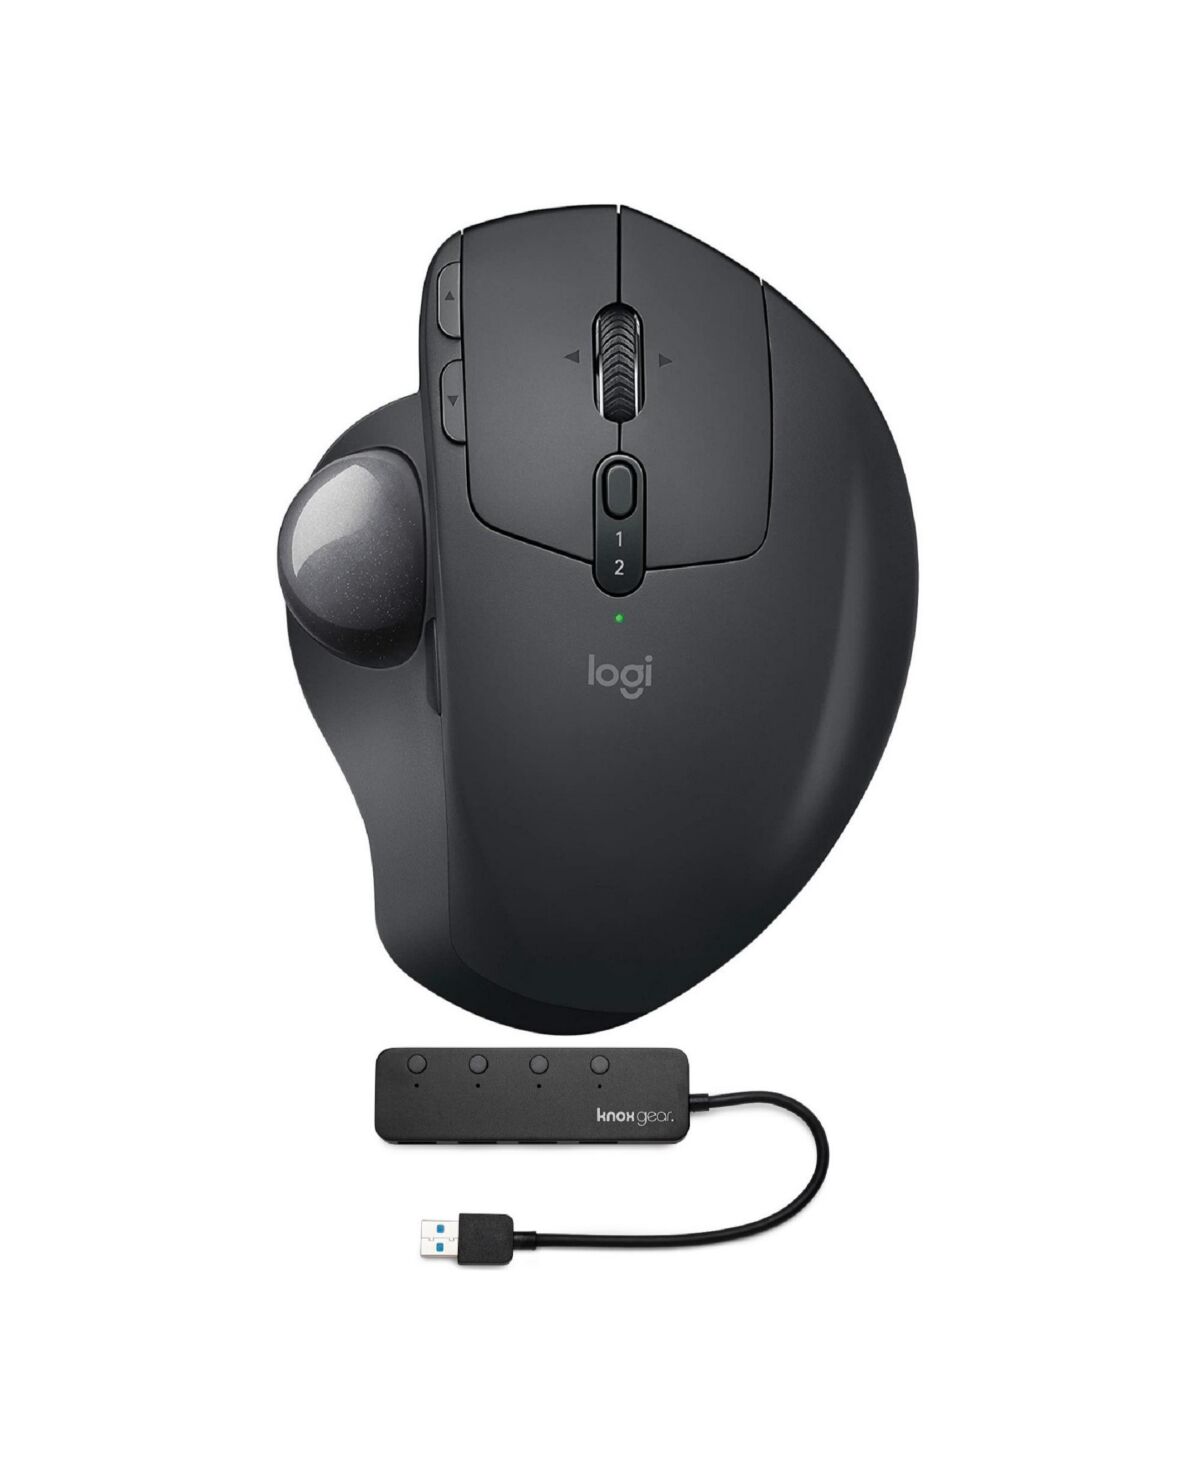 Logitech Mx Ergo Advanced Wireless Mouse Trackball with Knox Gear 4-Port Usb 3.0 Hub - Black